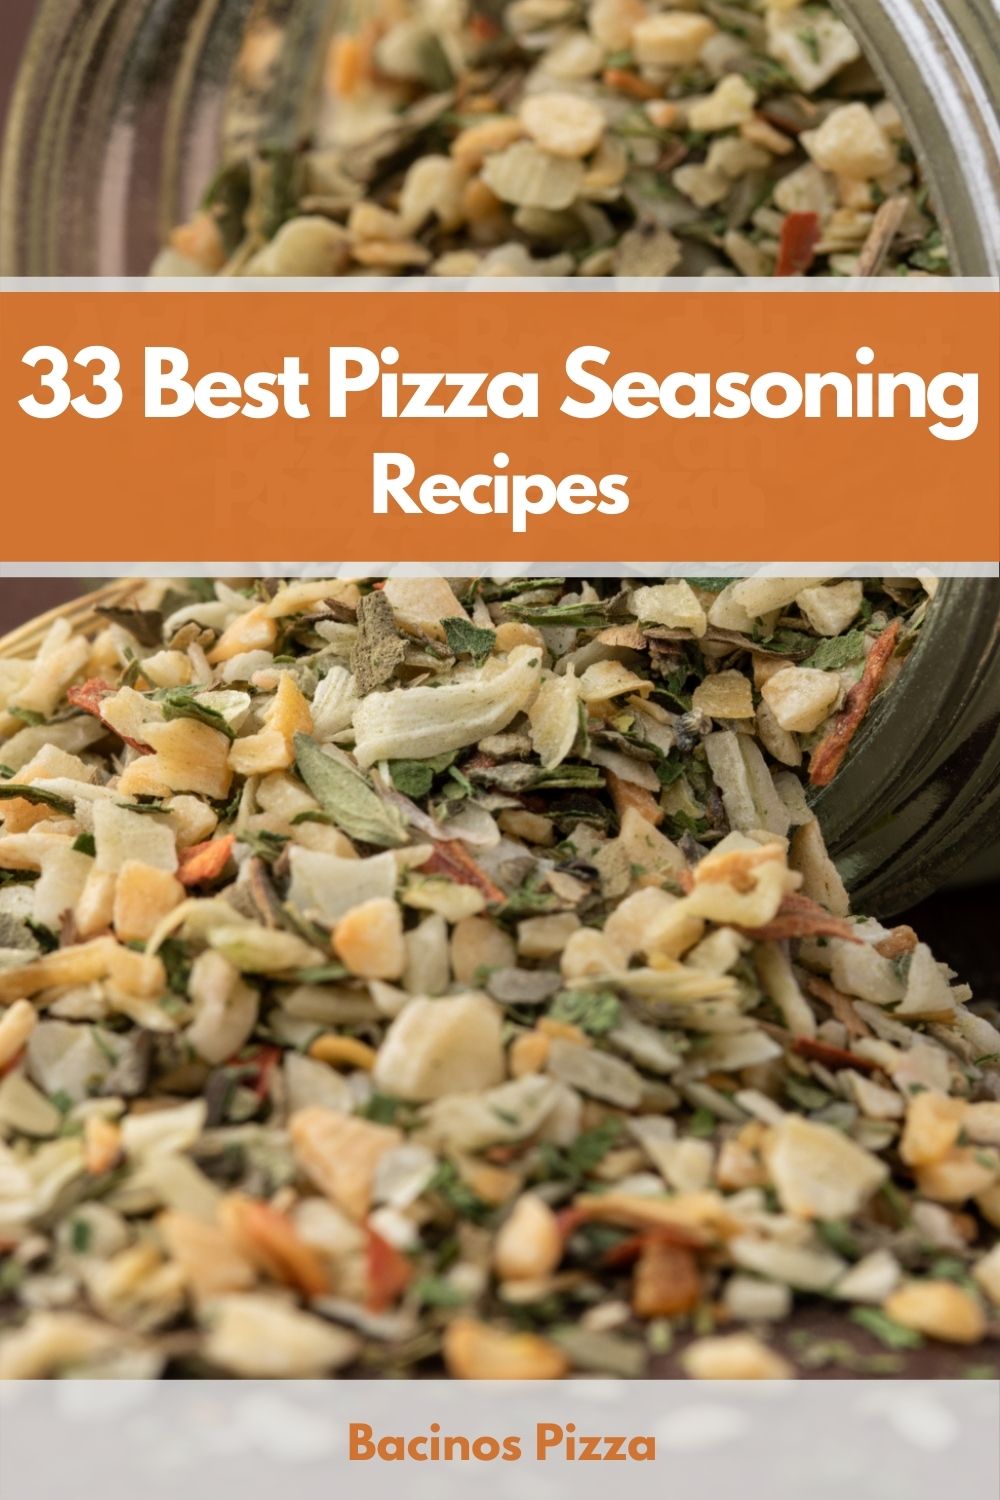 33 Best Pizza Seasoning Recipes pin